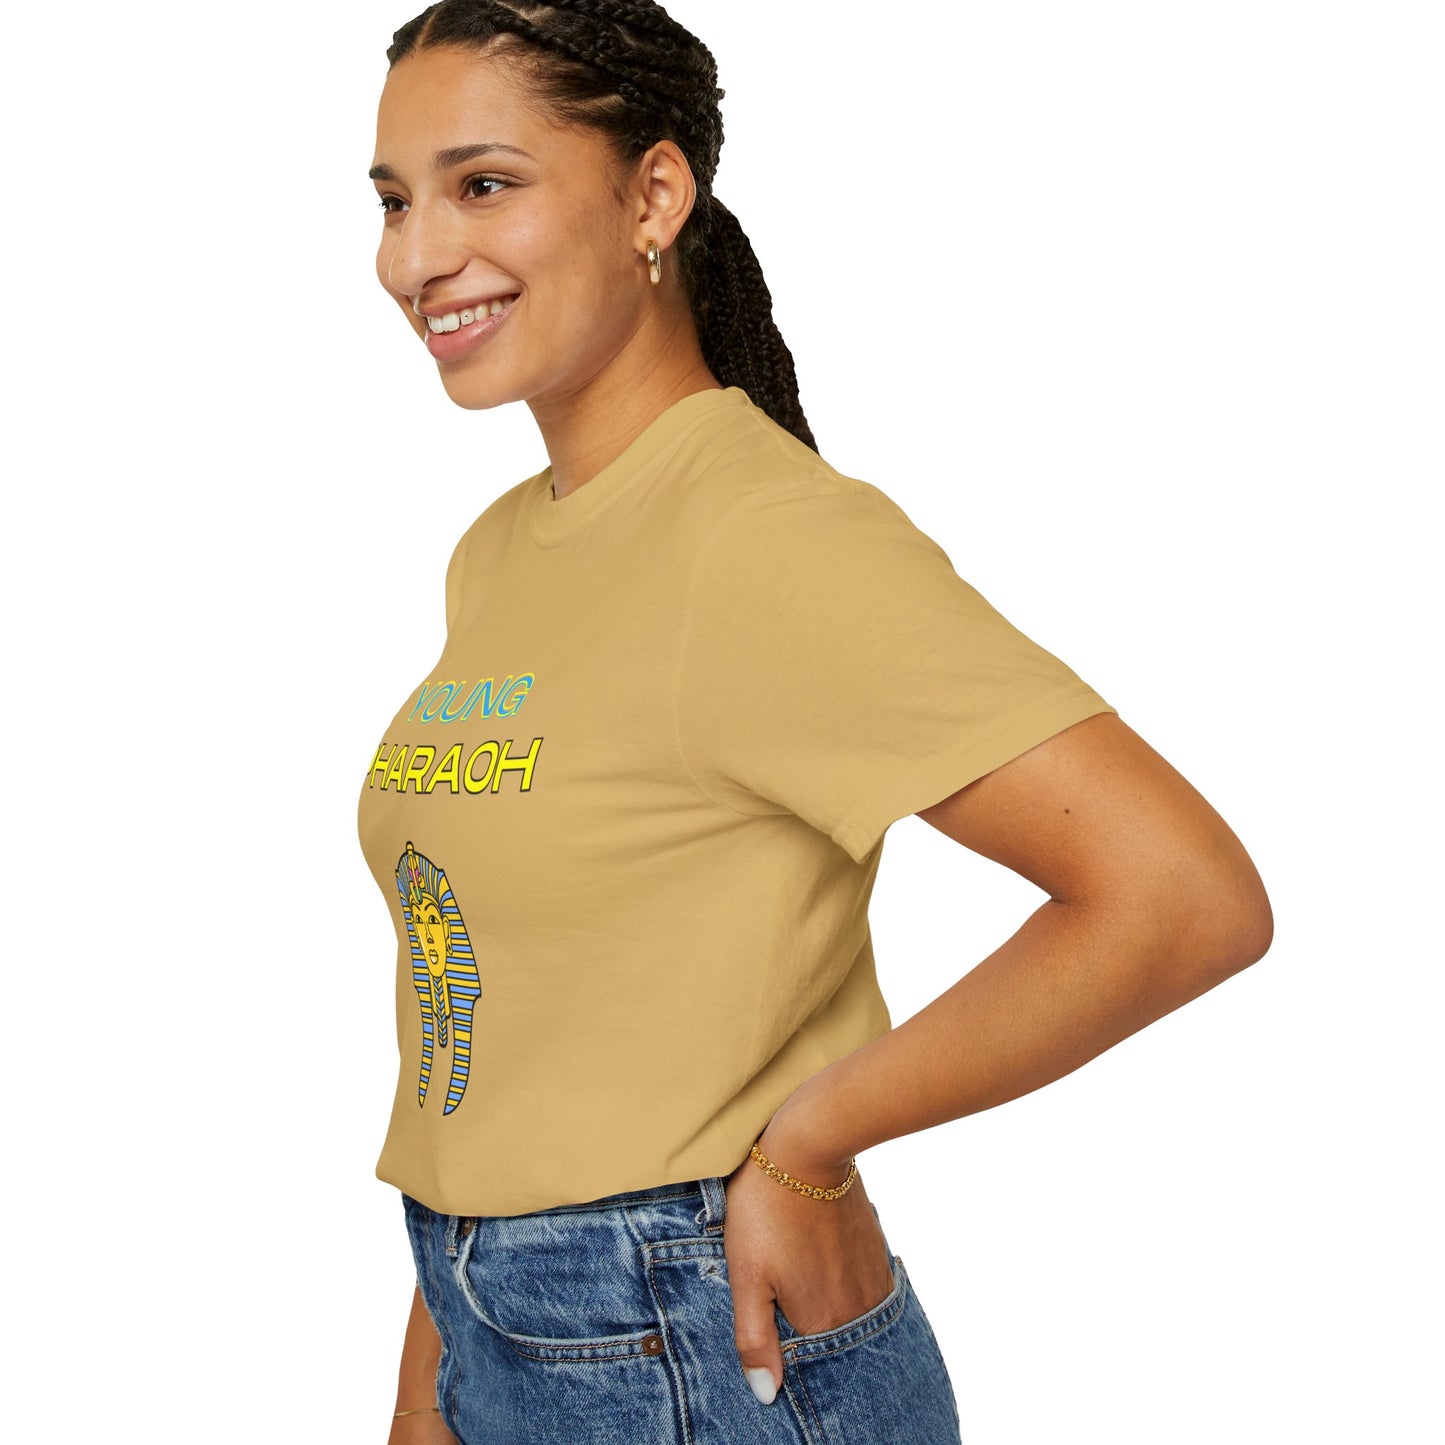 Unisex Young Pharaoh Garment-Dyed T-shirt